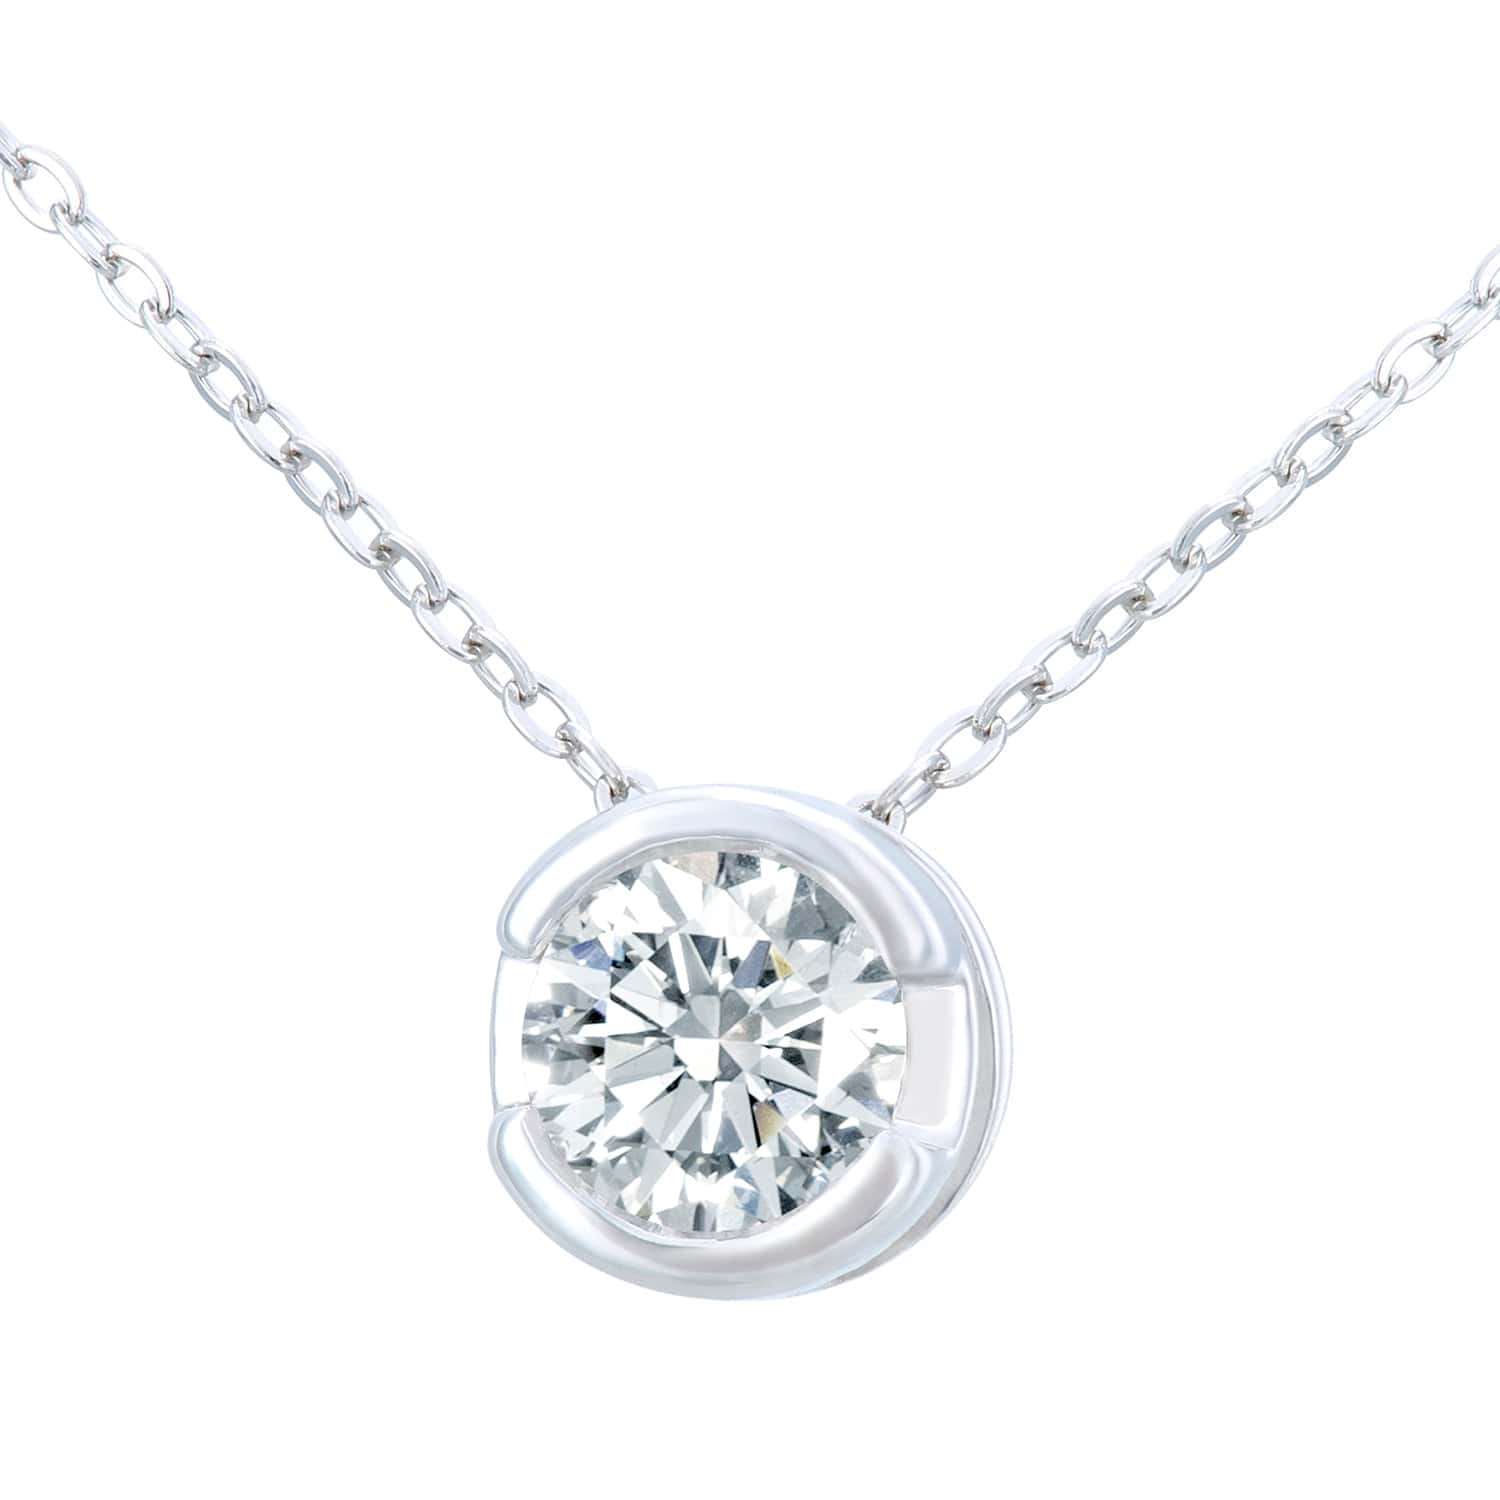 Lynora Luxe Pendant White Gold 9ct / Diamond 9ct White Gold 0.25 ct Diamond Pendant and Chain